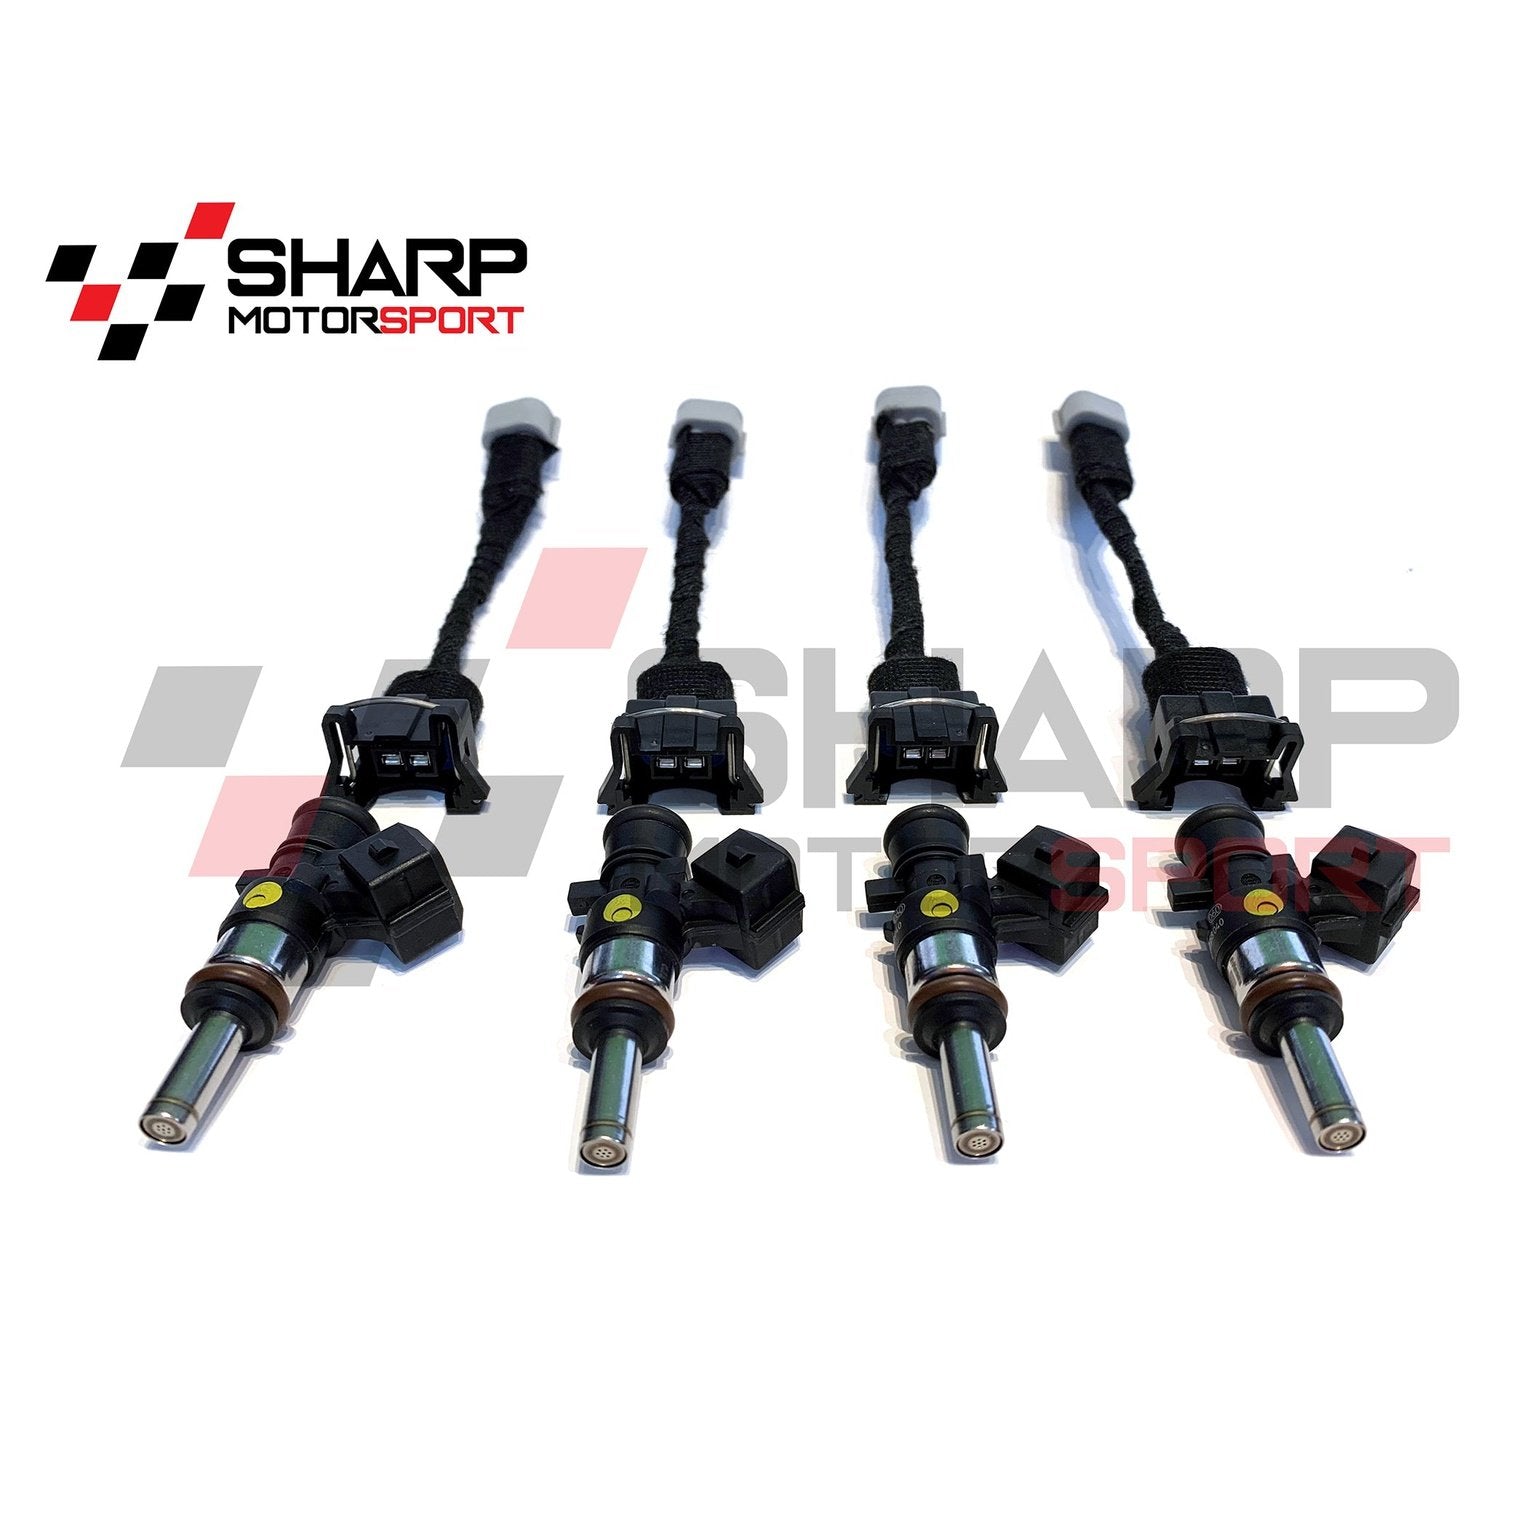 Sharp-Motorsport Upgrade VAG 2.0 TFSI EA888.3 MPI Injector Set